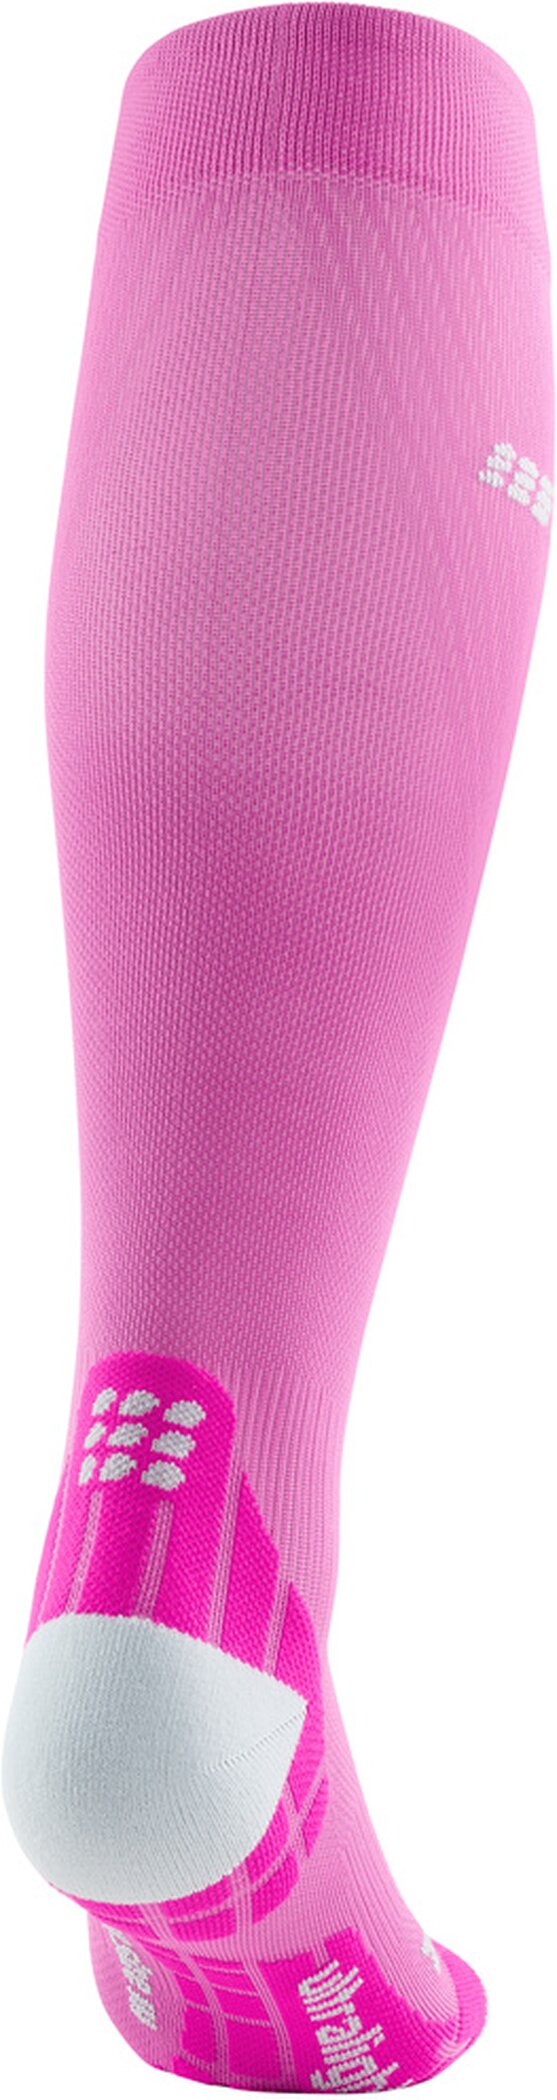 Ultralight Pro Socks für Ladys